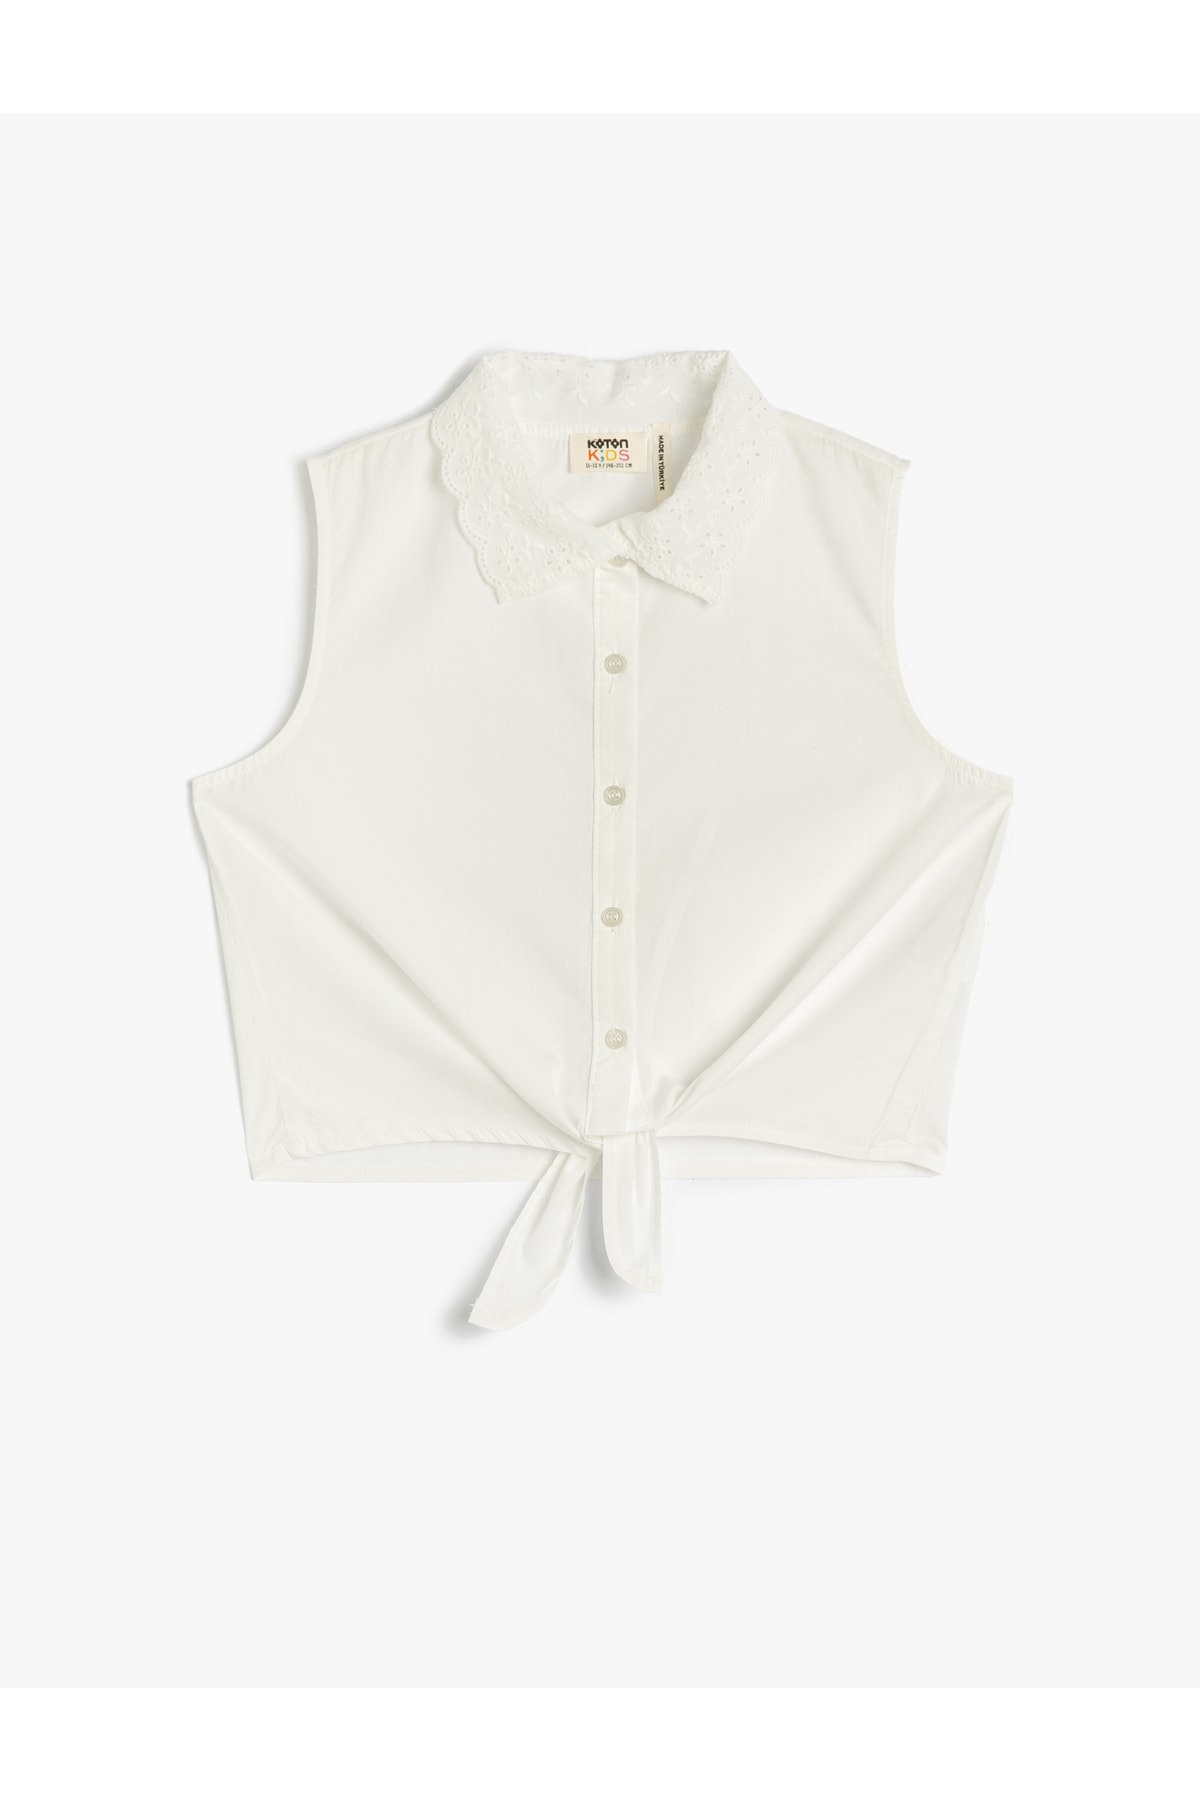 Levně Koton Crop Shirt Front Tie Detailed Sleeveless Collar Embroidered